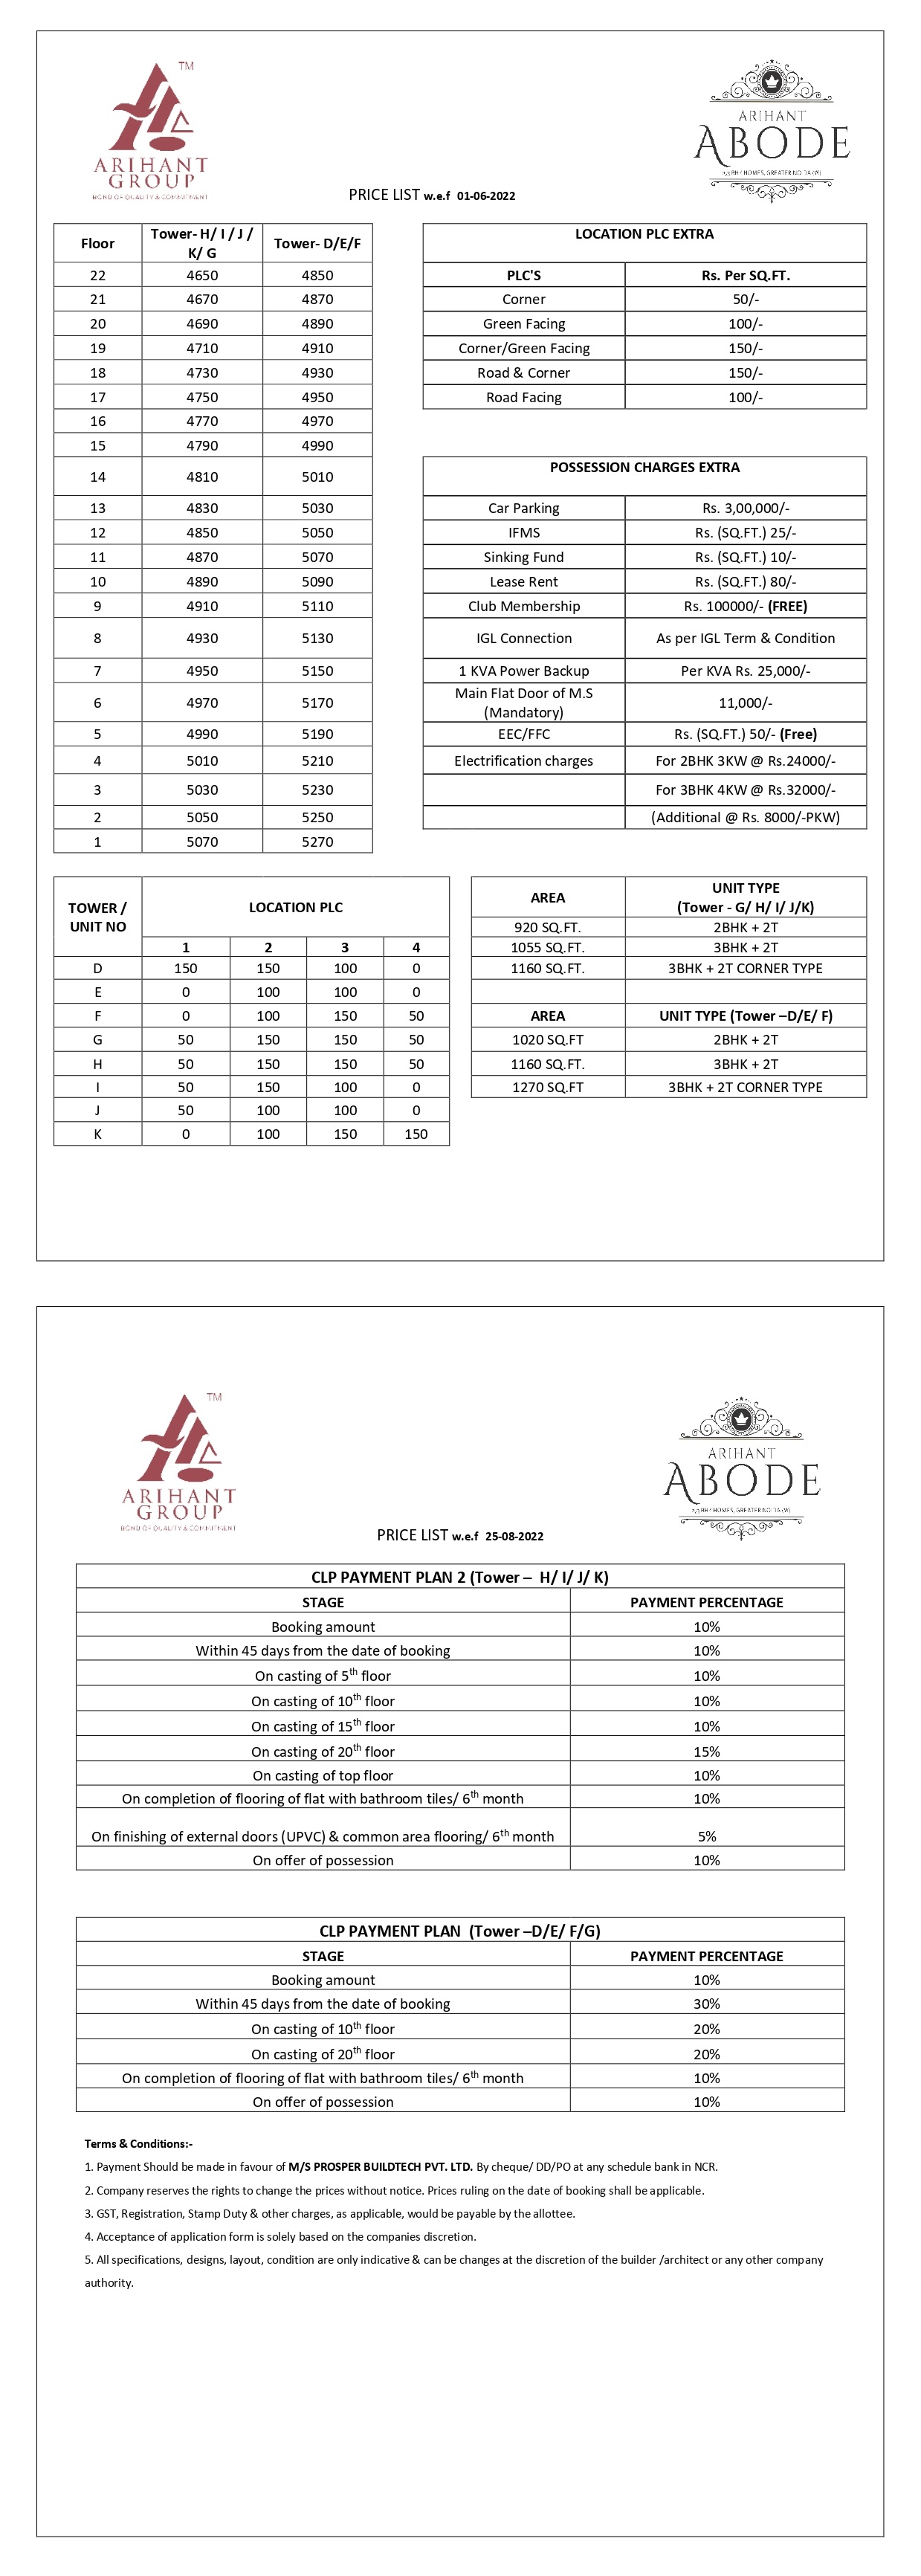 Arihant Abode Price List